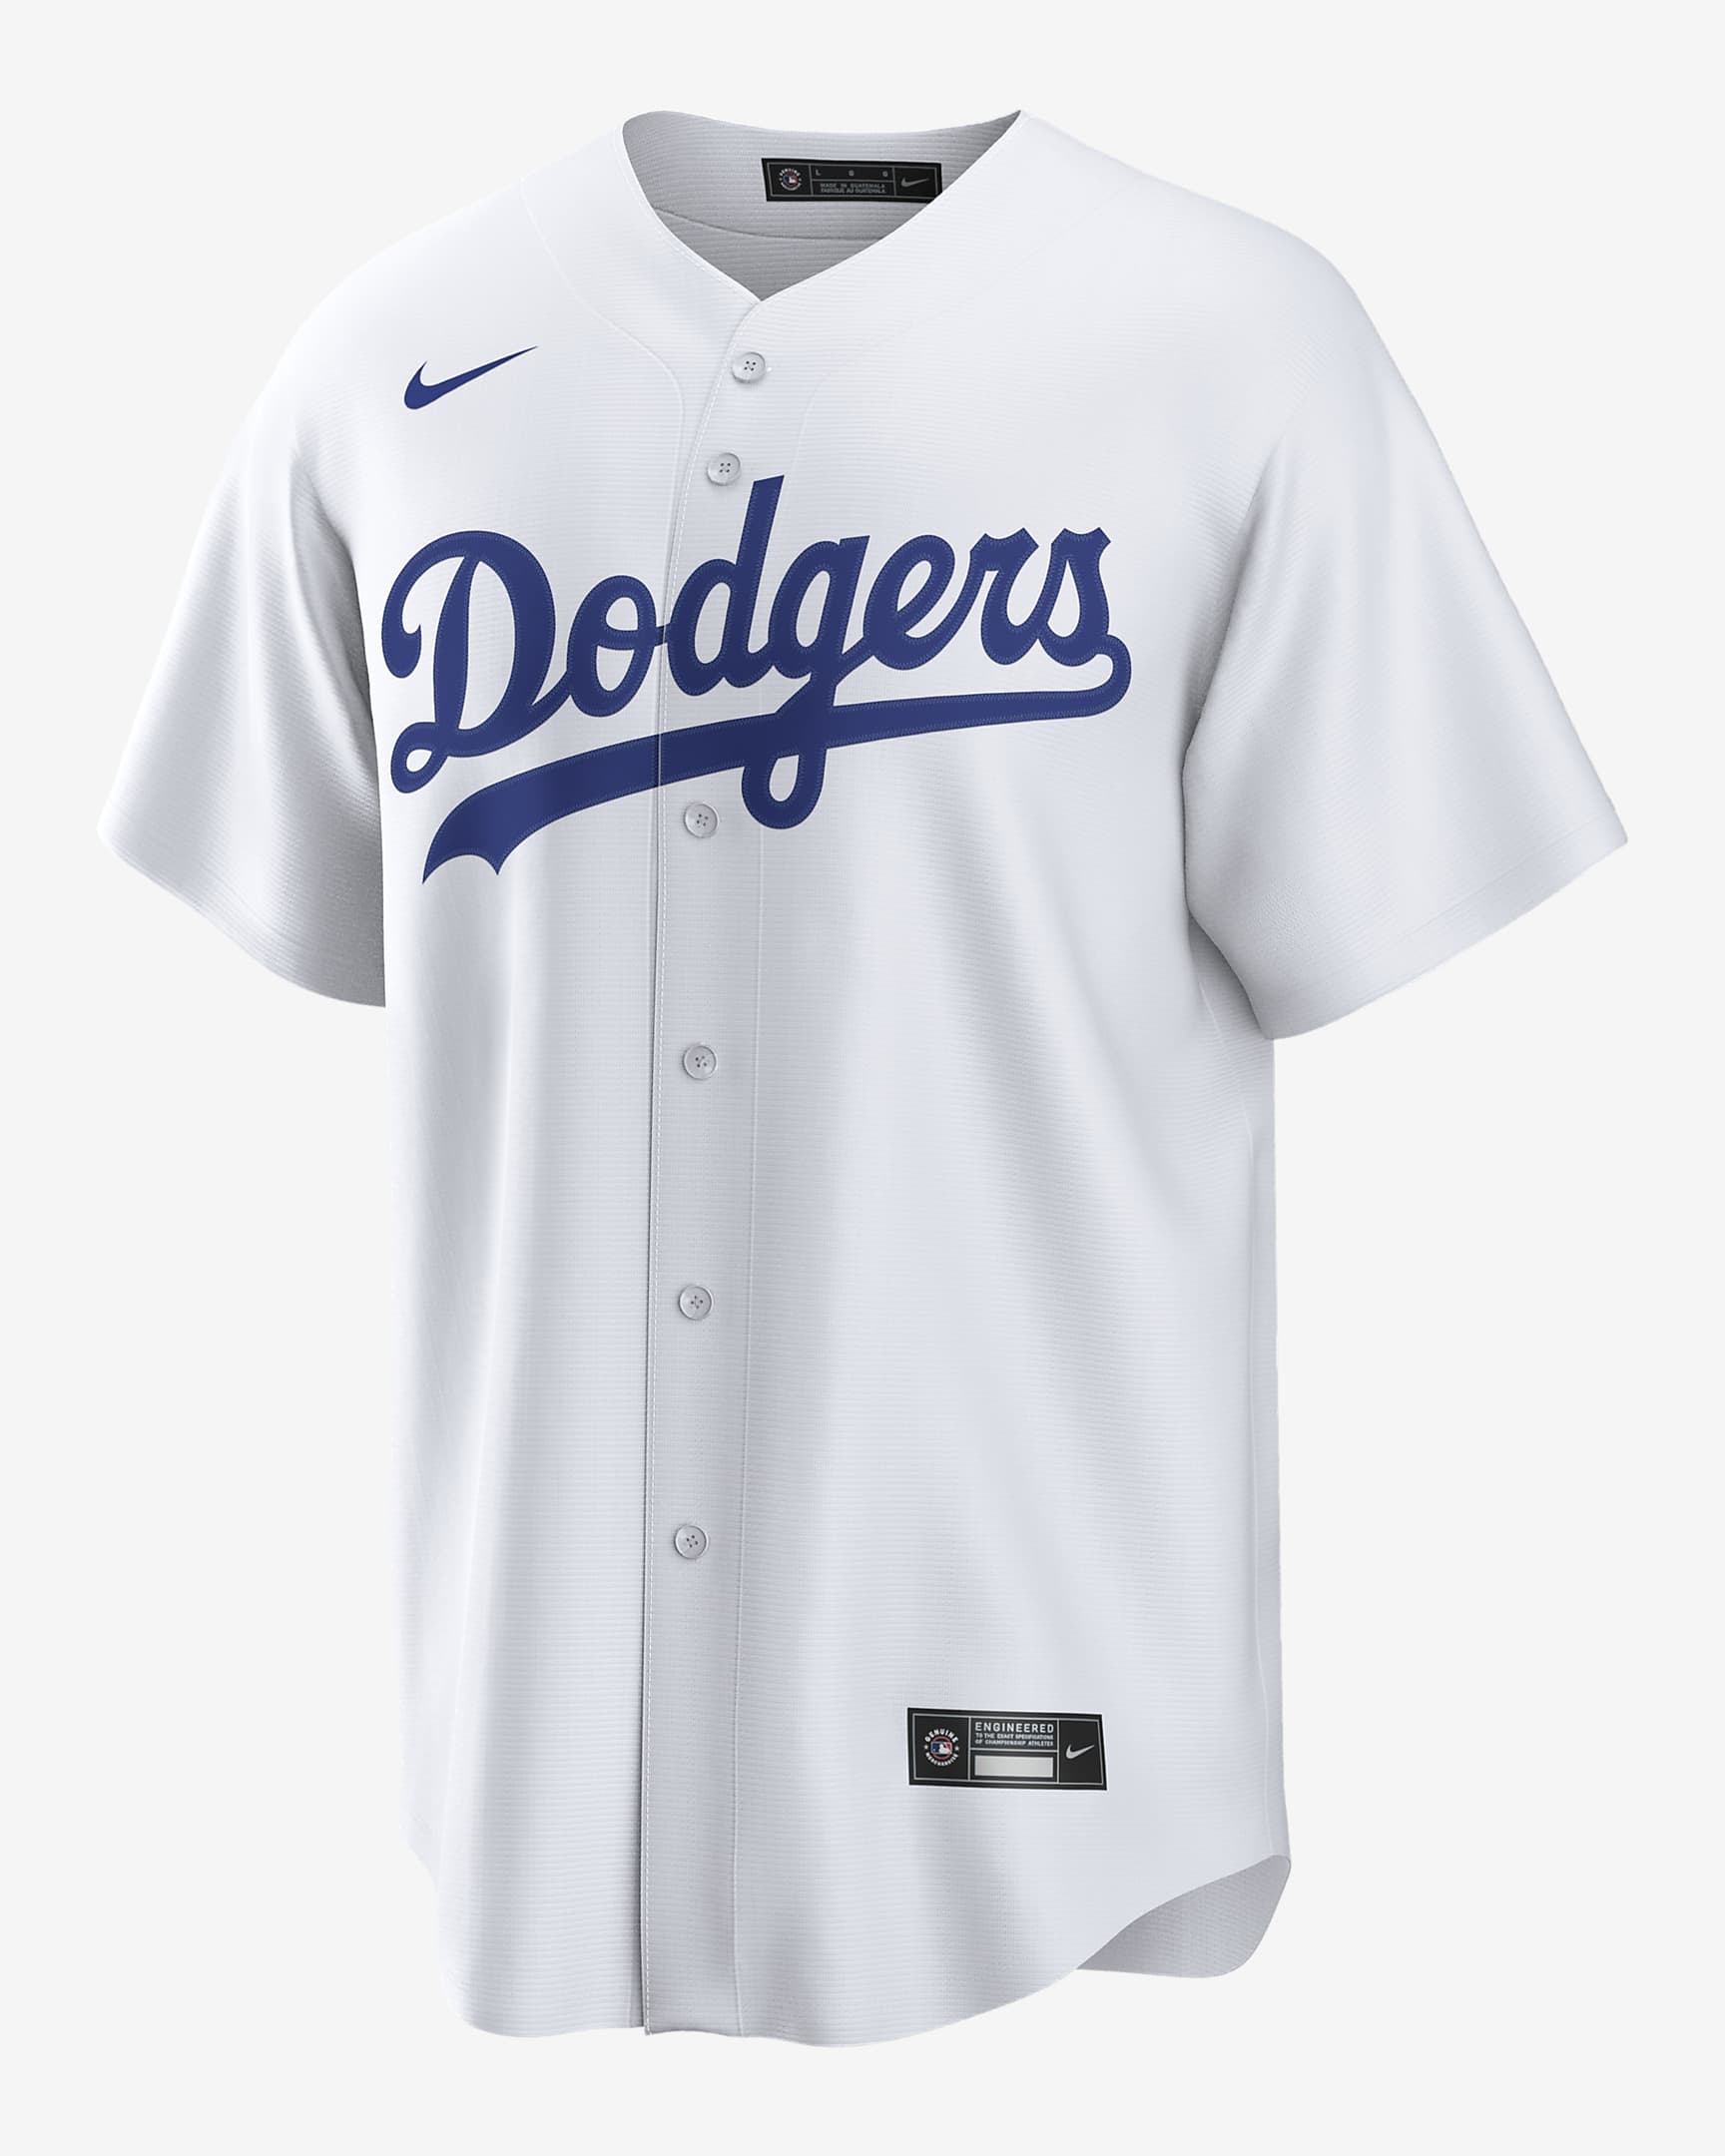 Доджерс джерси. Джерси la Бейсбол. Рубашка Dodgers. Los Angeles Dodgers White White. Реплика футболки